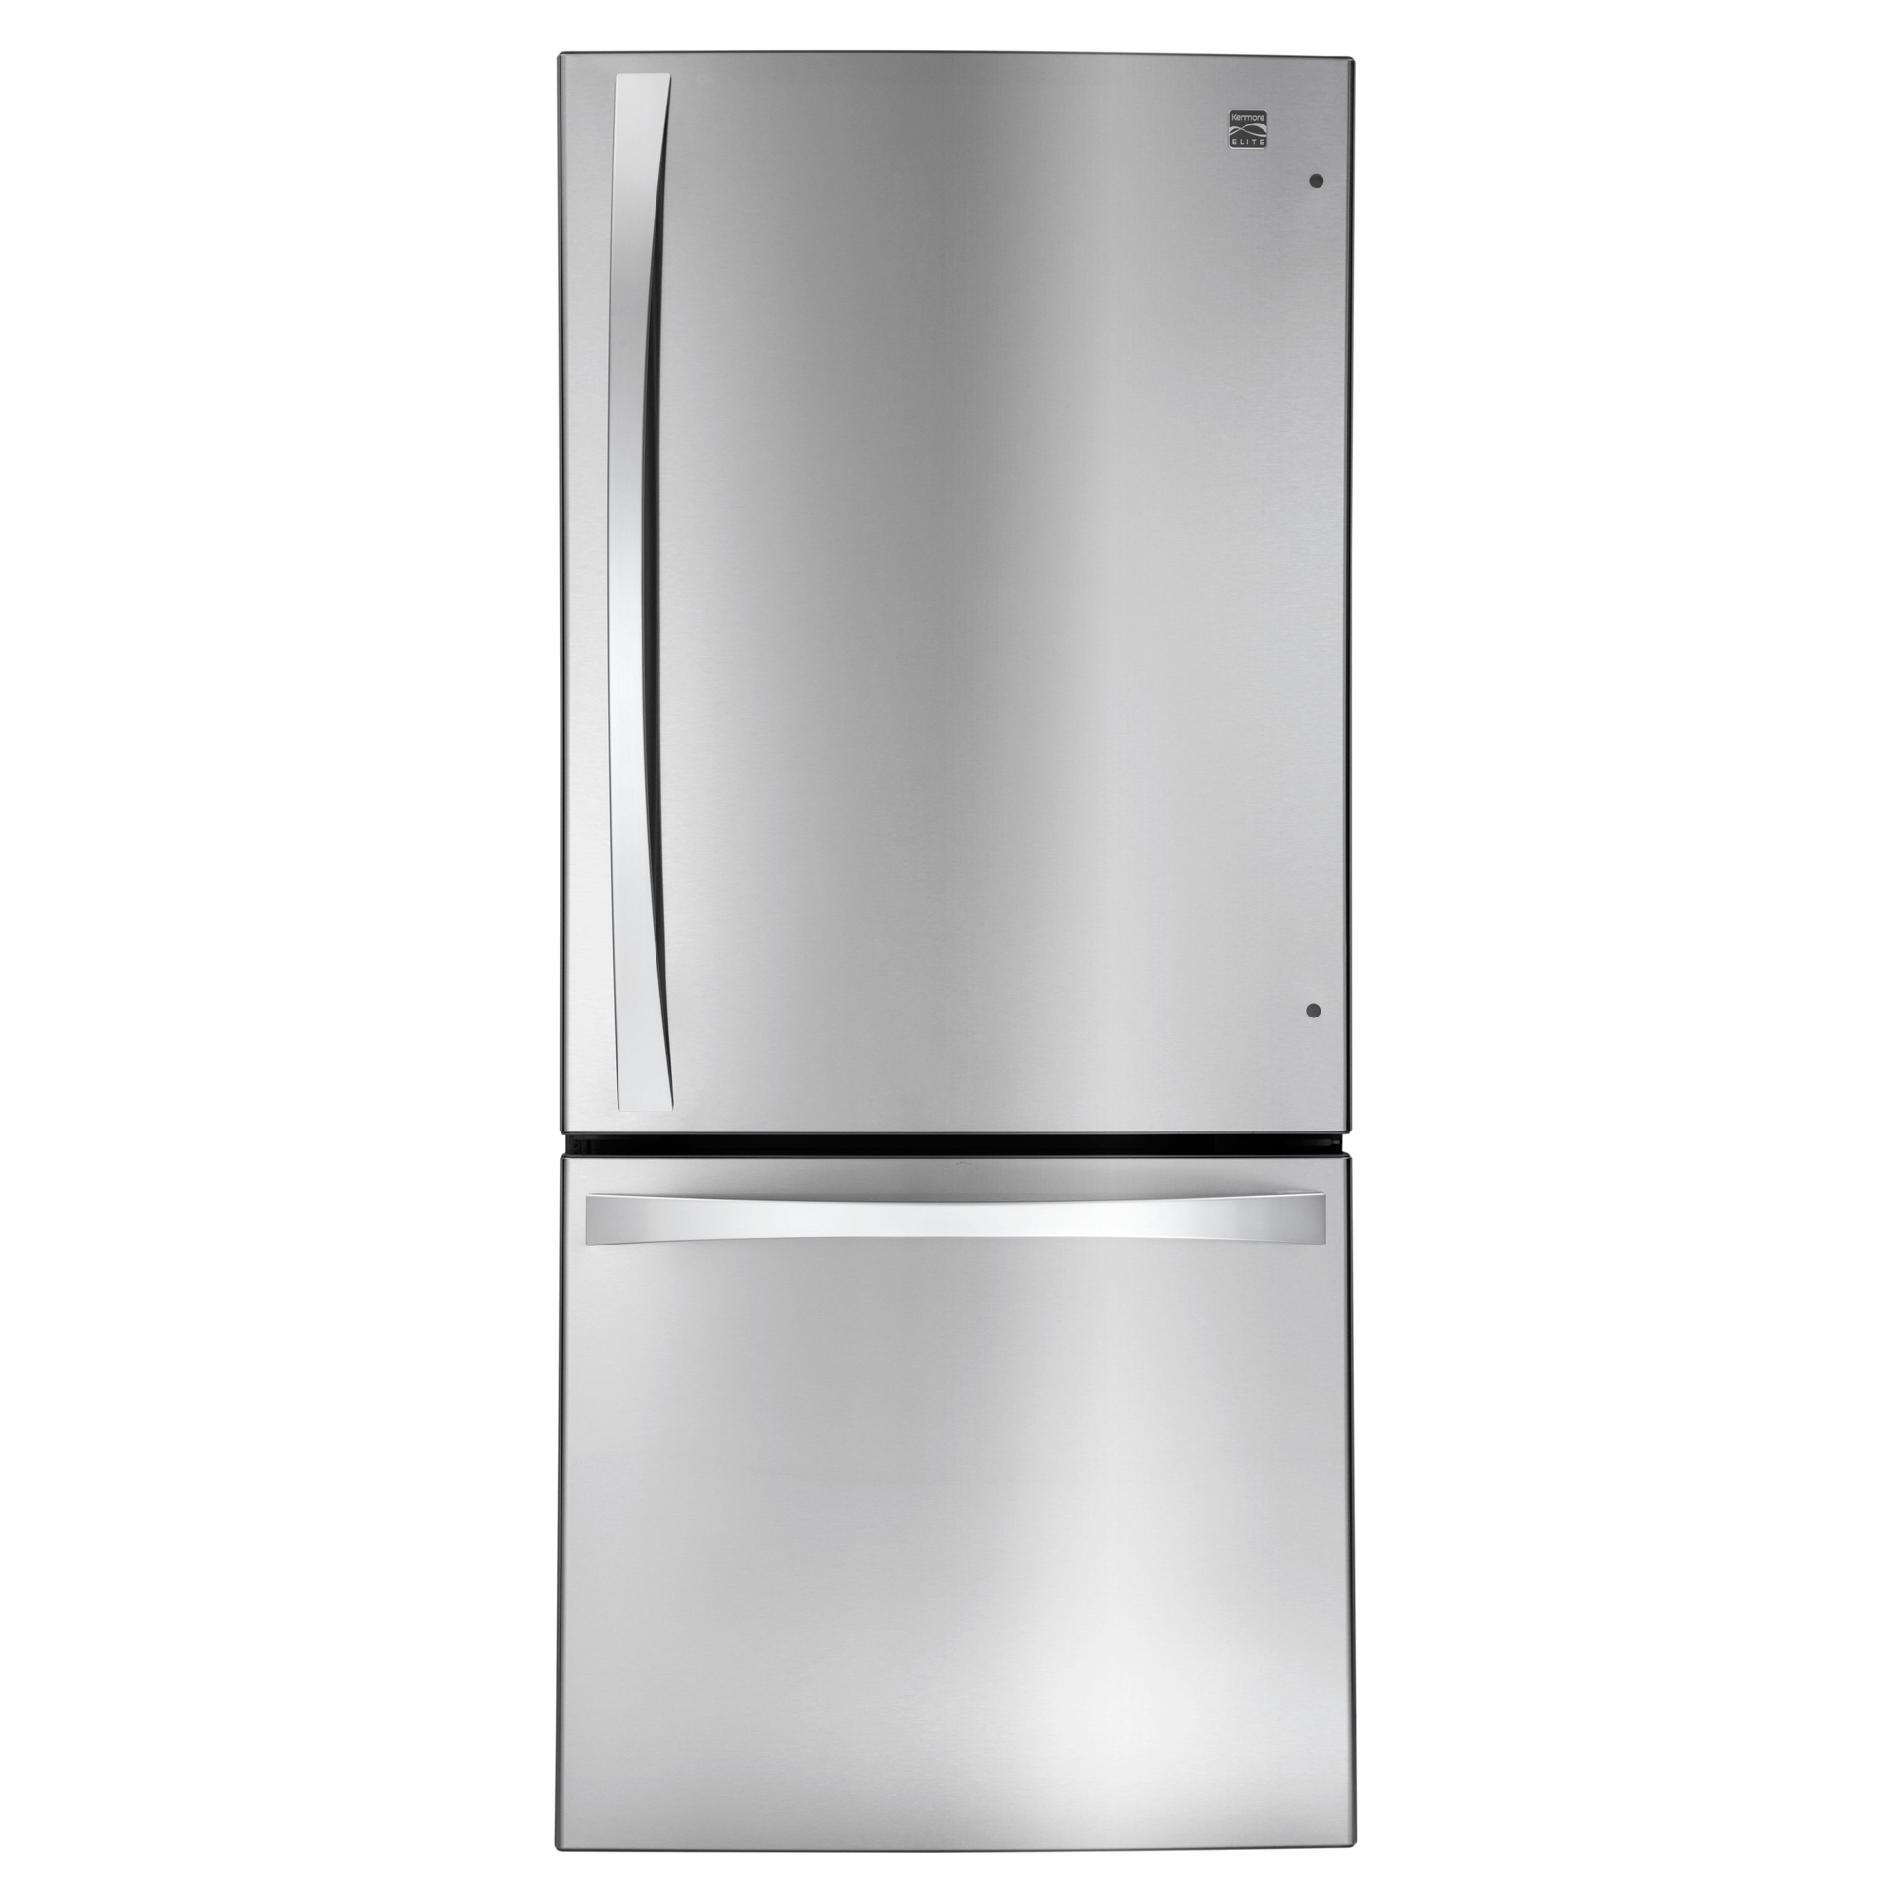 Kenmore Elite Kenmore Elite 79023 22.1 cu. ft. Bottom-Freezer Refrigerator - Stainless Steel